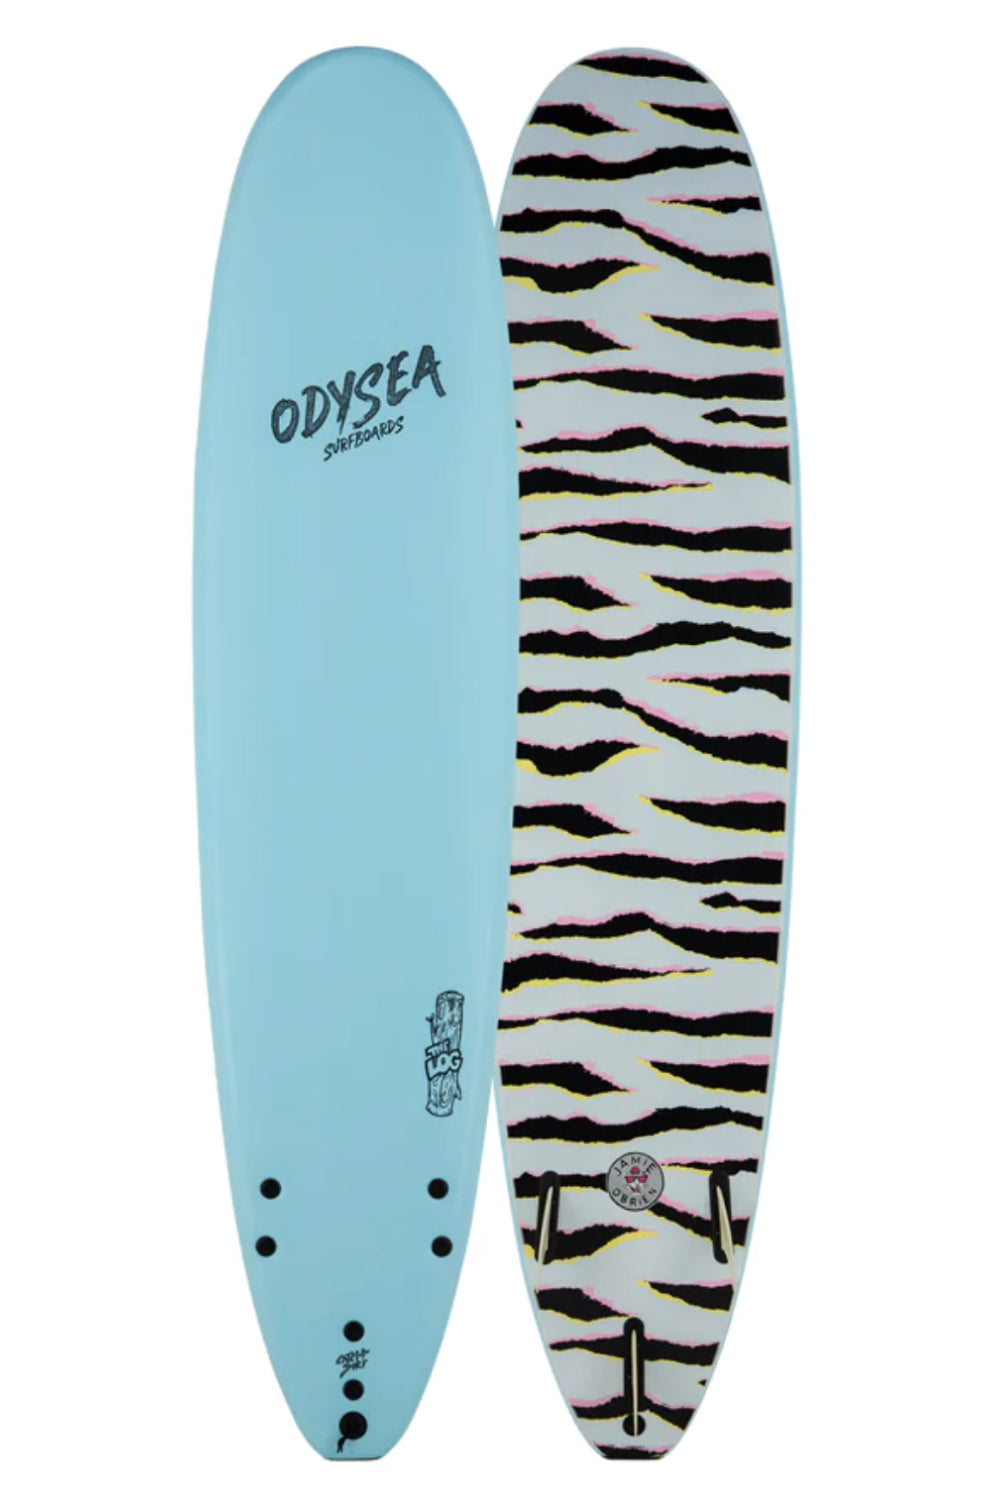 Catch Surf Jamie O'Brien JOB Odysea Pro Log Softboard - Comes with fins